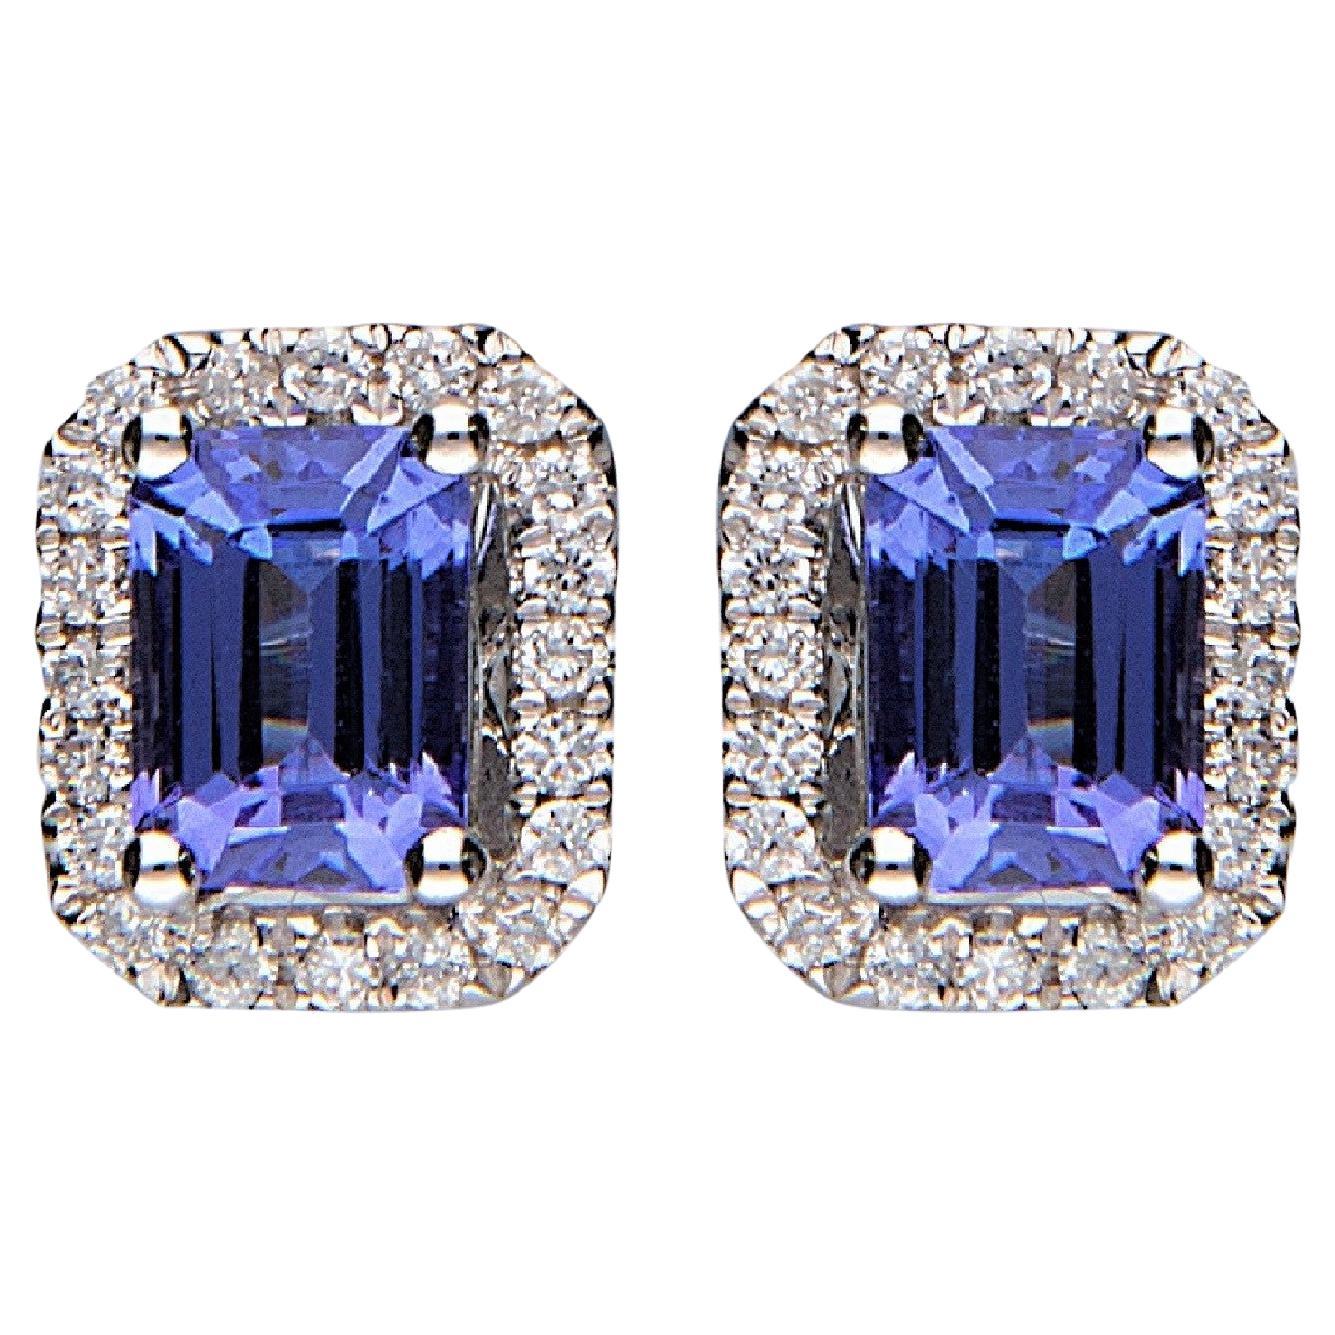 1.28 Carat Tanzanite Emerald Cut Diamond Accents 14K White Gold Stud Earring